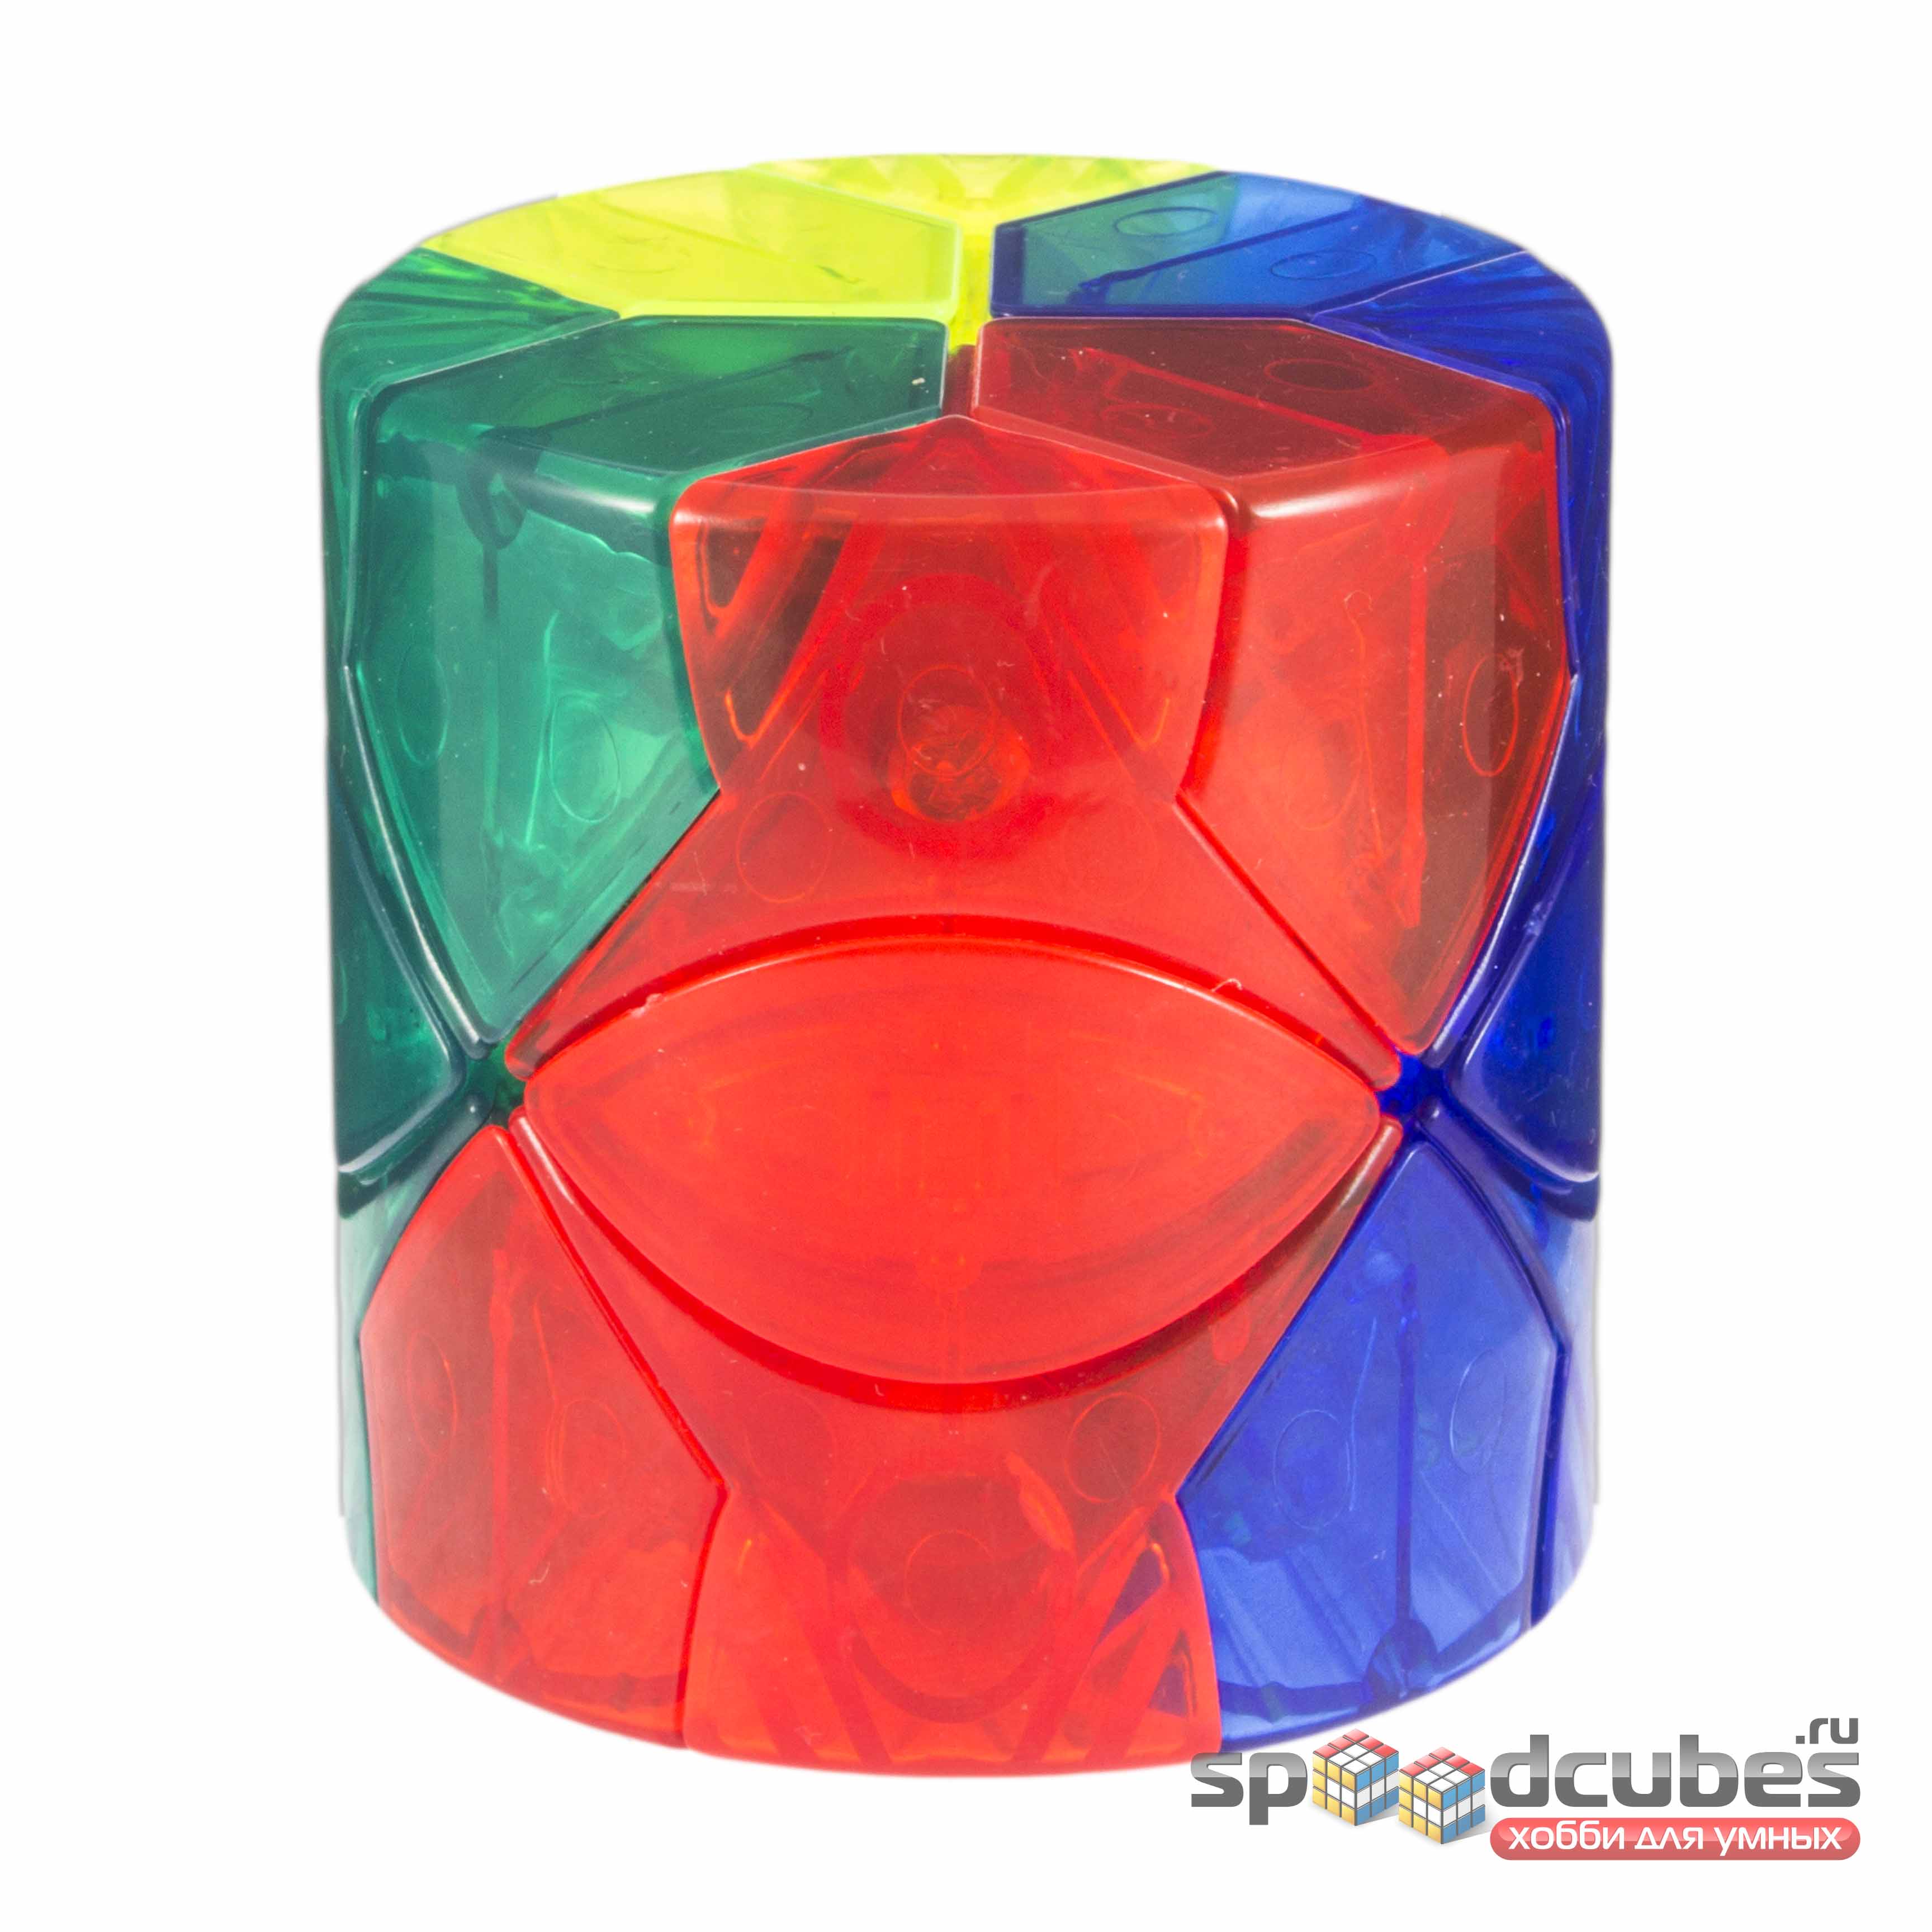 Moyu Barrel Redi Cube Transparent 2